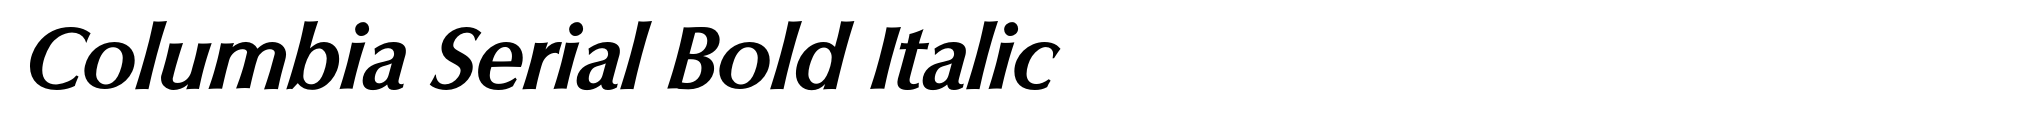 Columbia Serial Bold Italic image